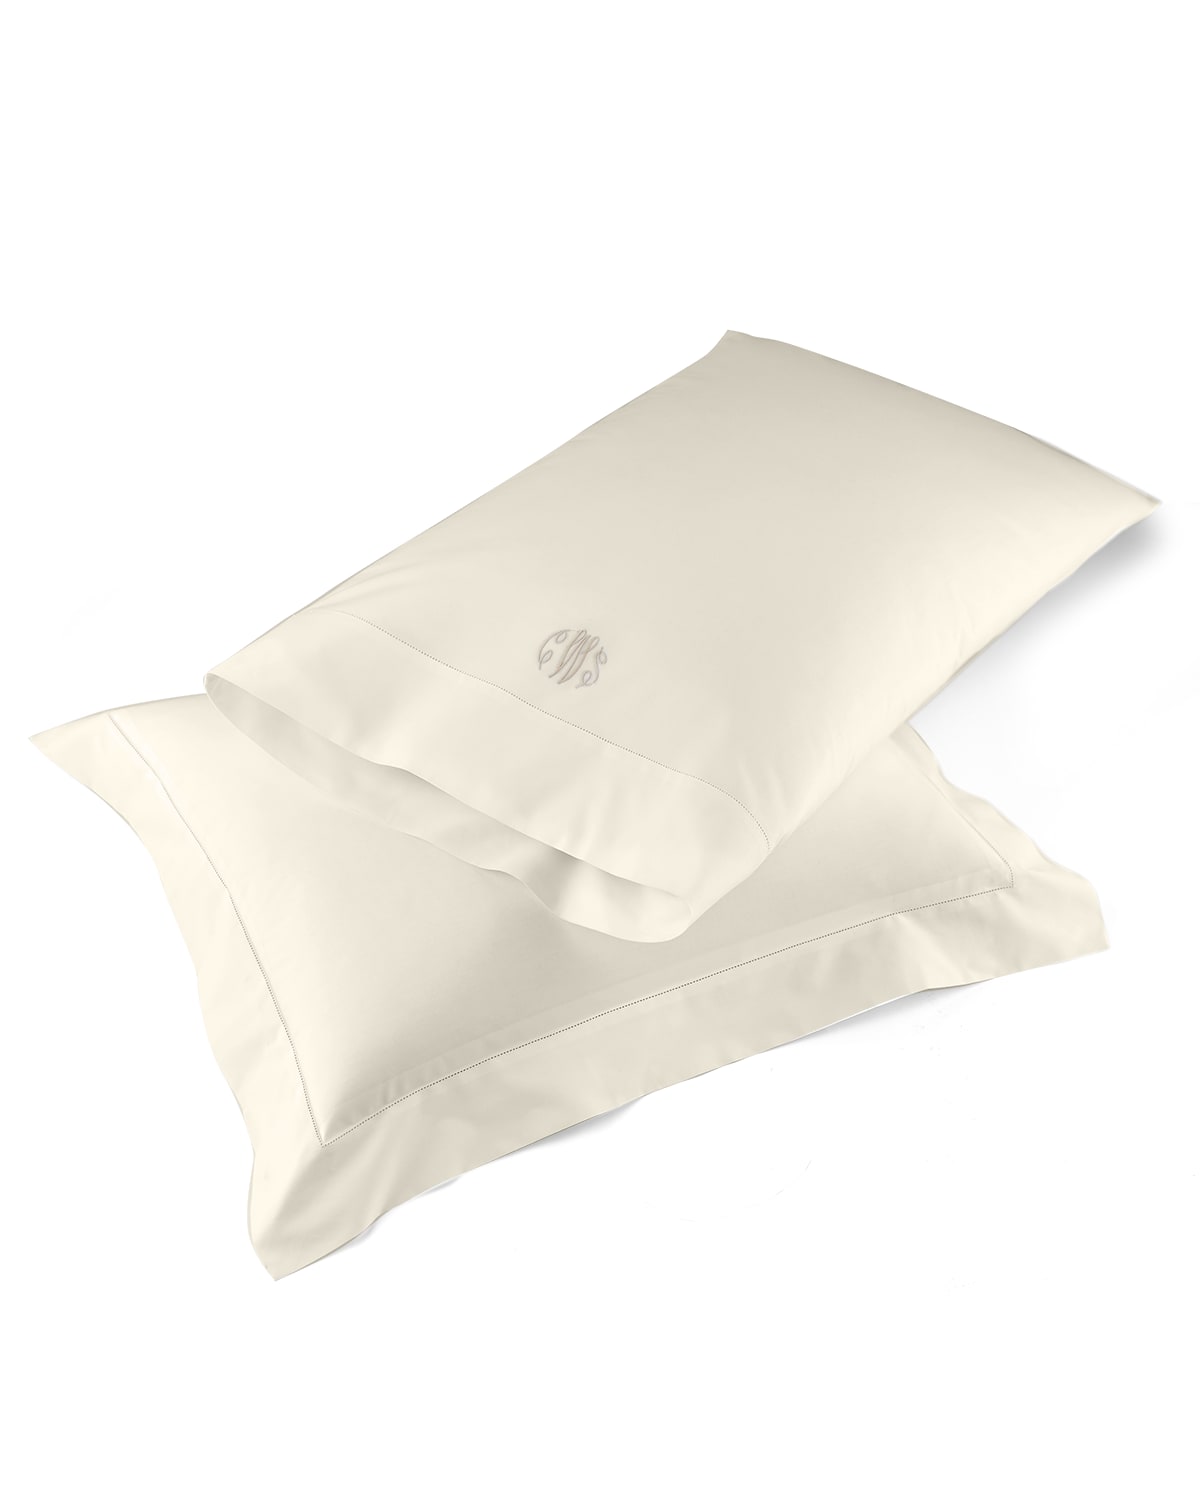 Matouk Positano Hemstitch Wrinkle Free Standard Pillowcase, Pair In Ivory